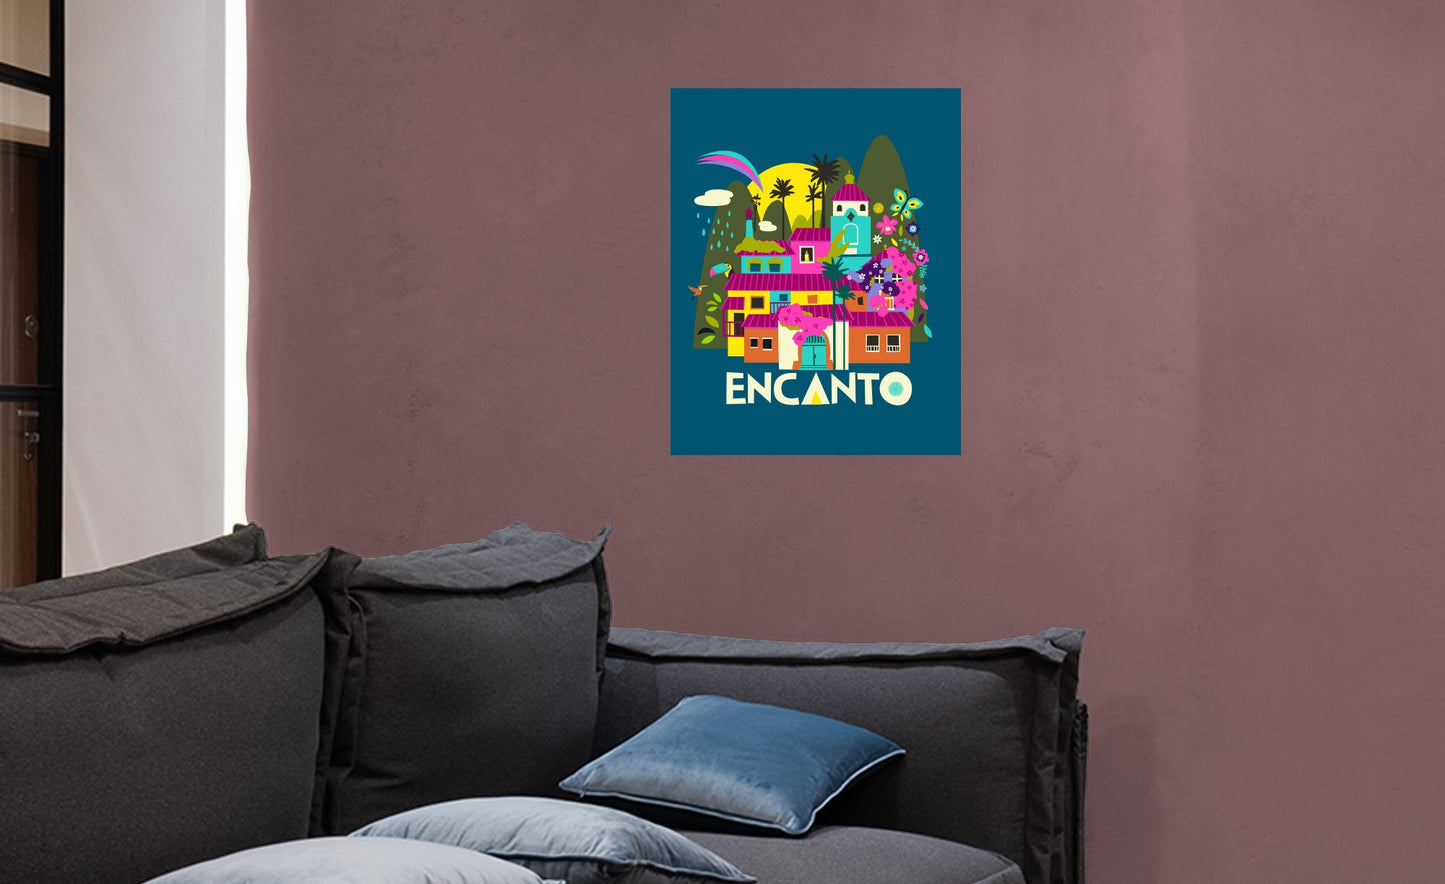 Encanto: Encanto Casita Art Poster - Officially Licensed Disney Removable Adhesive Decal